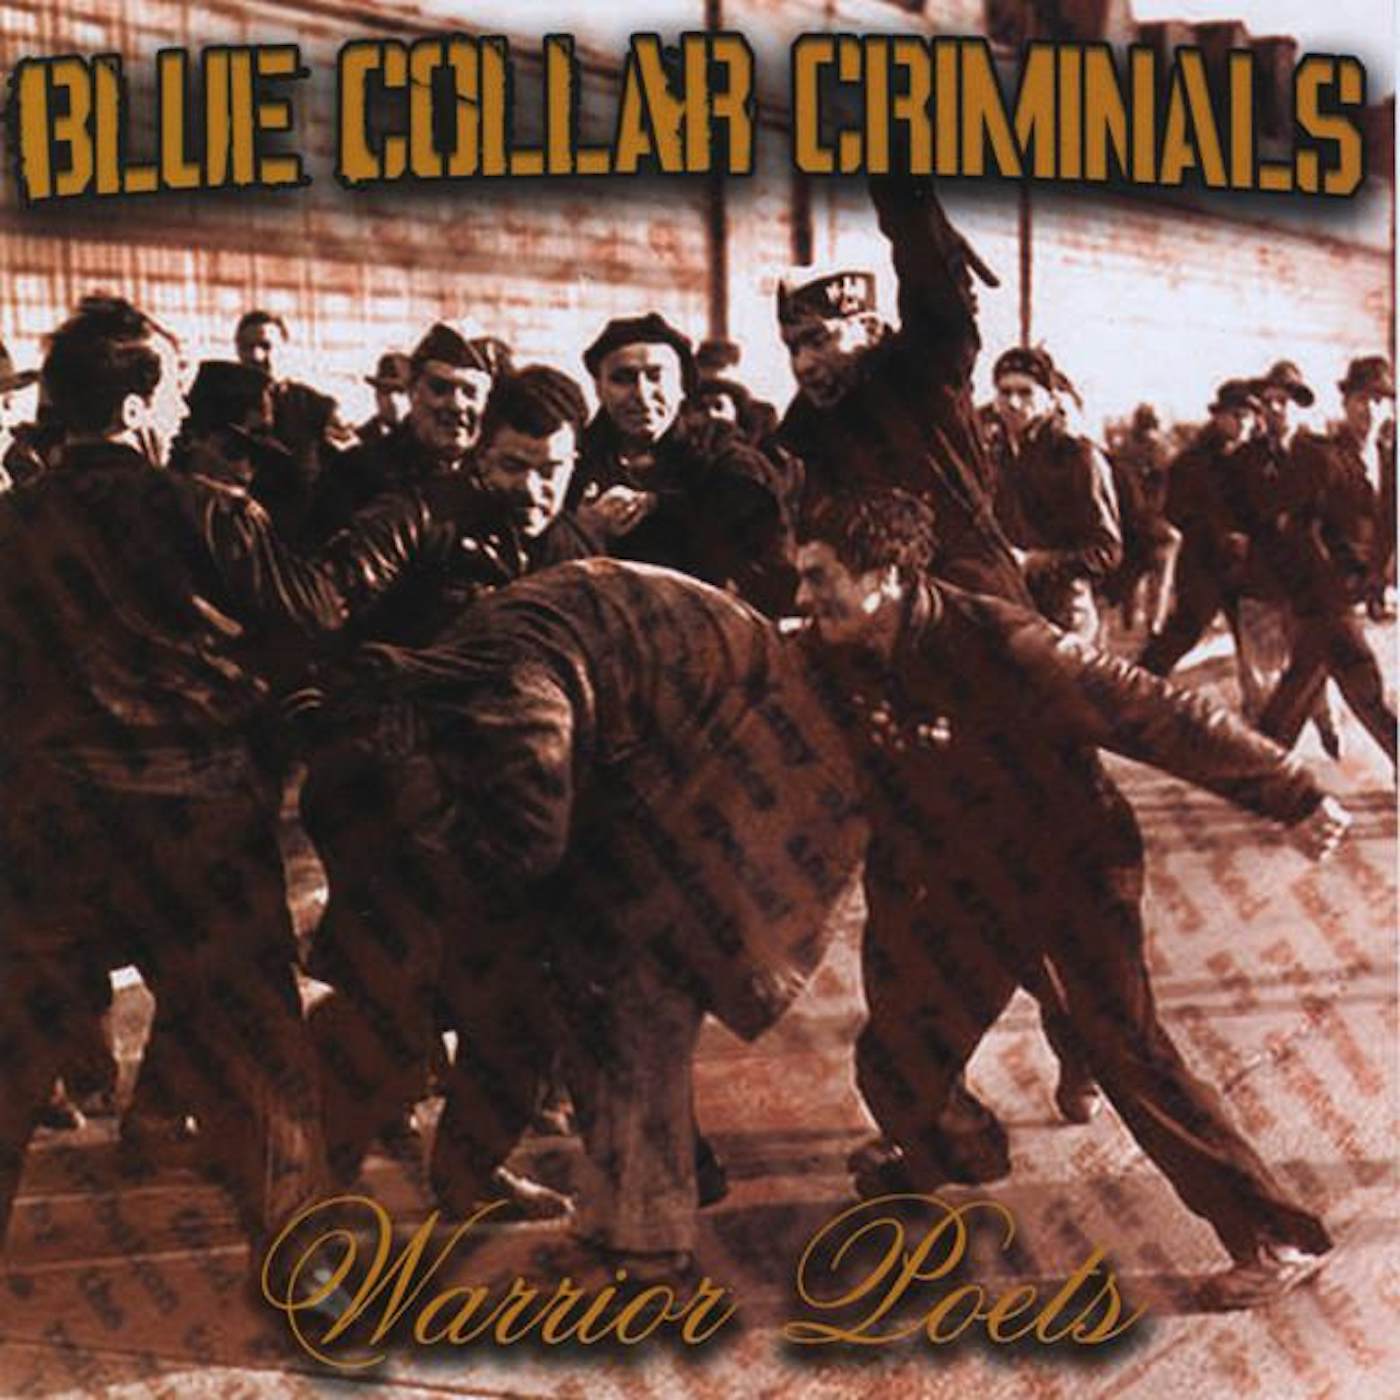 Blue Collar Criminals